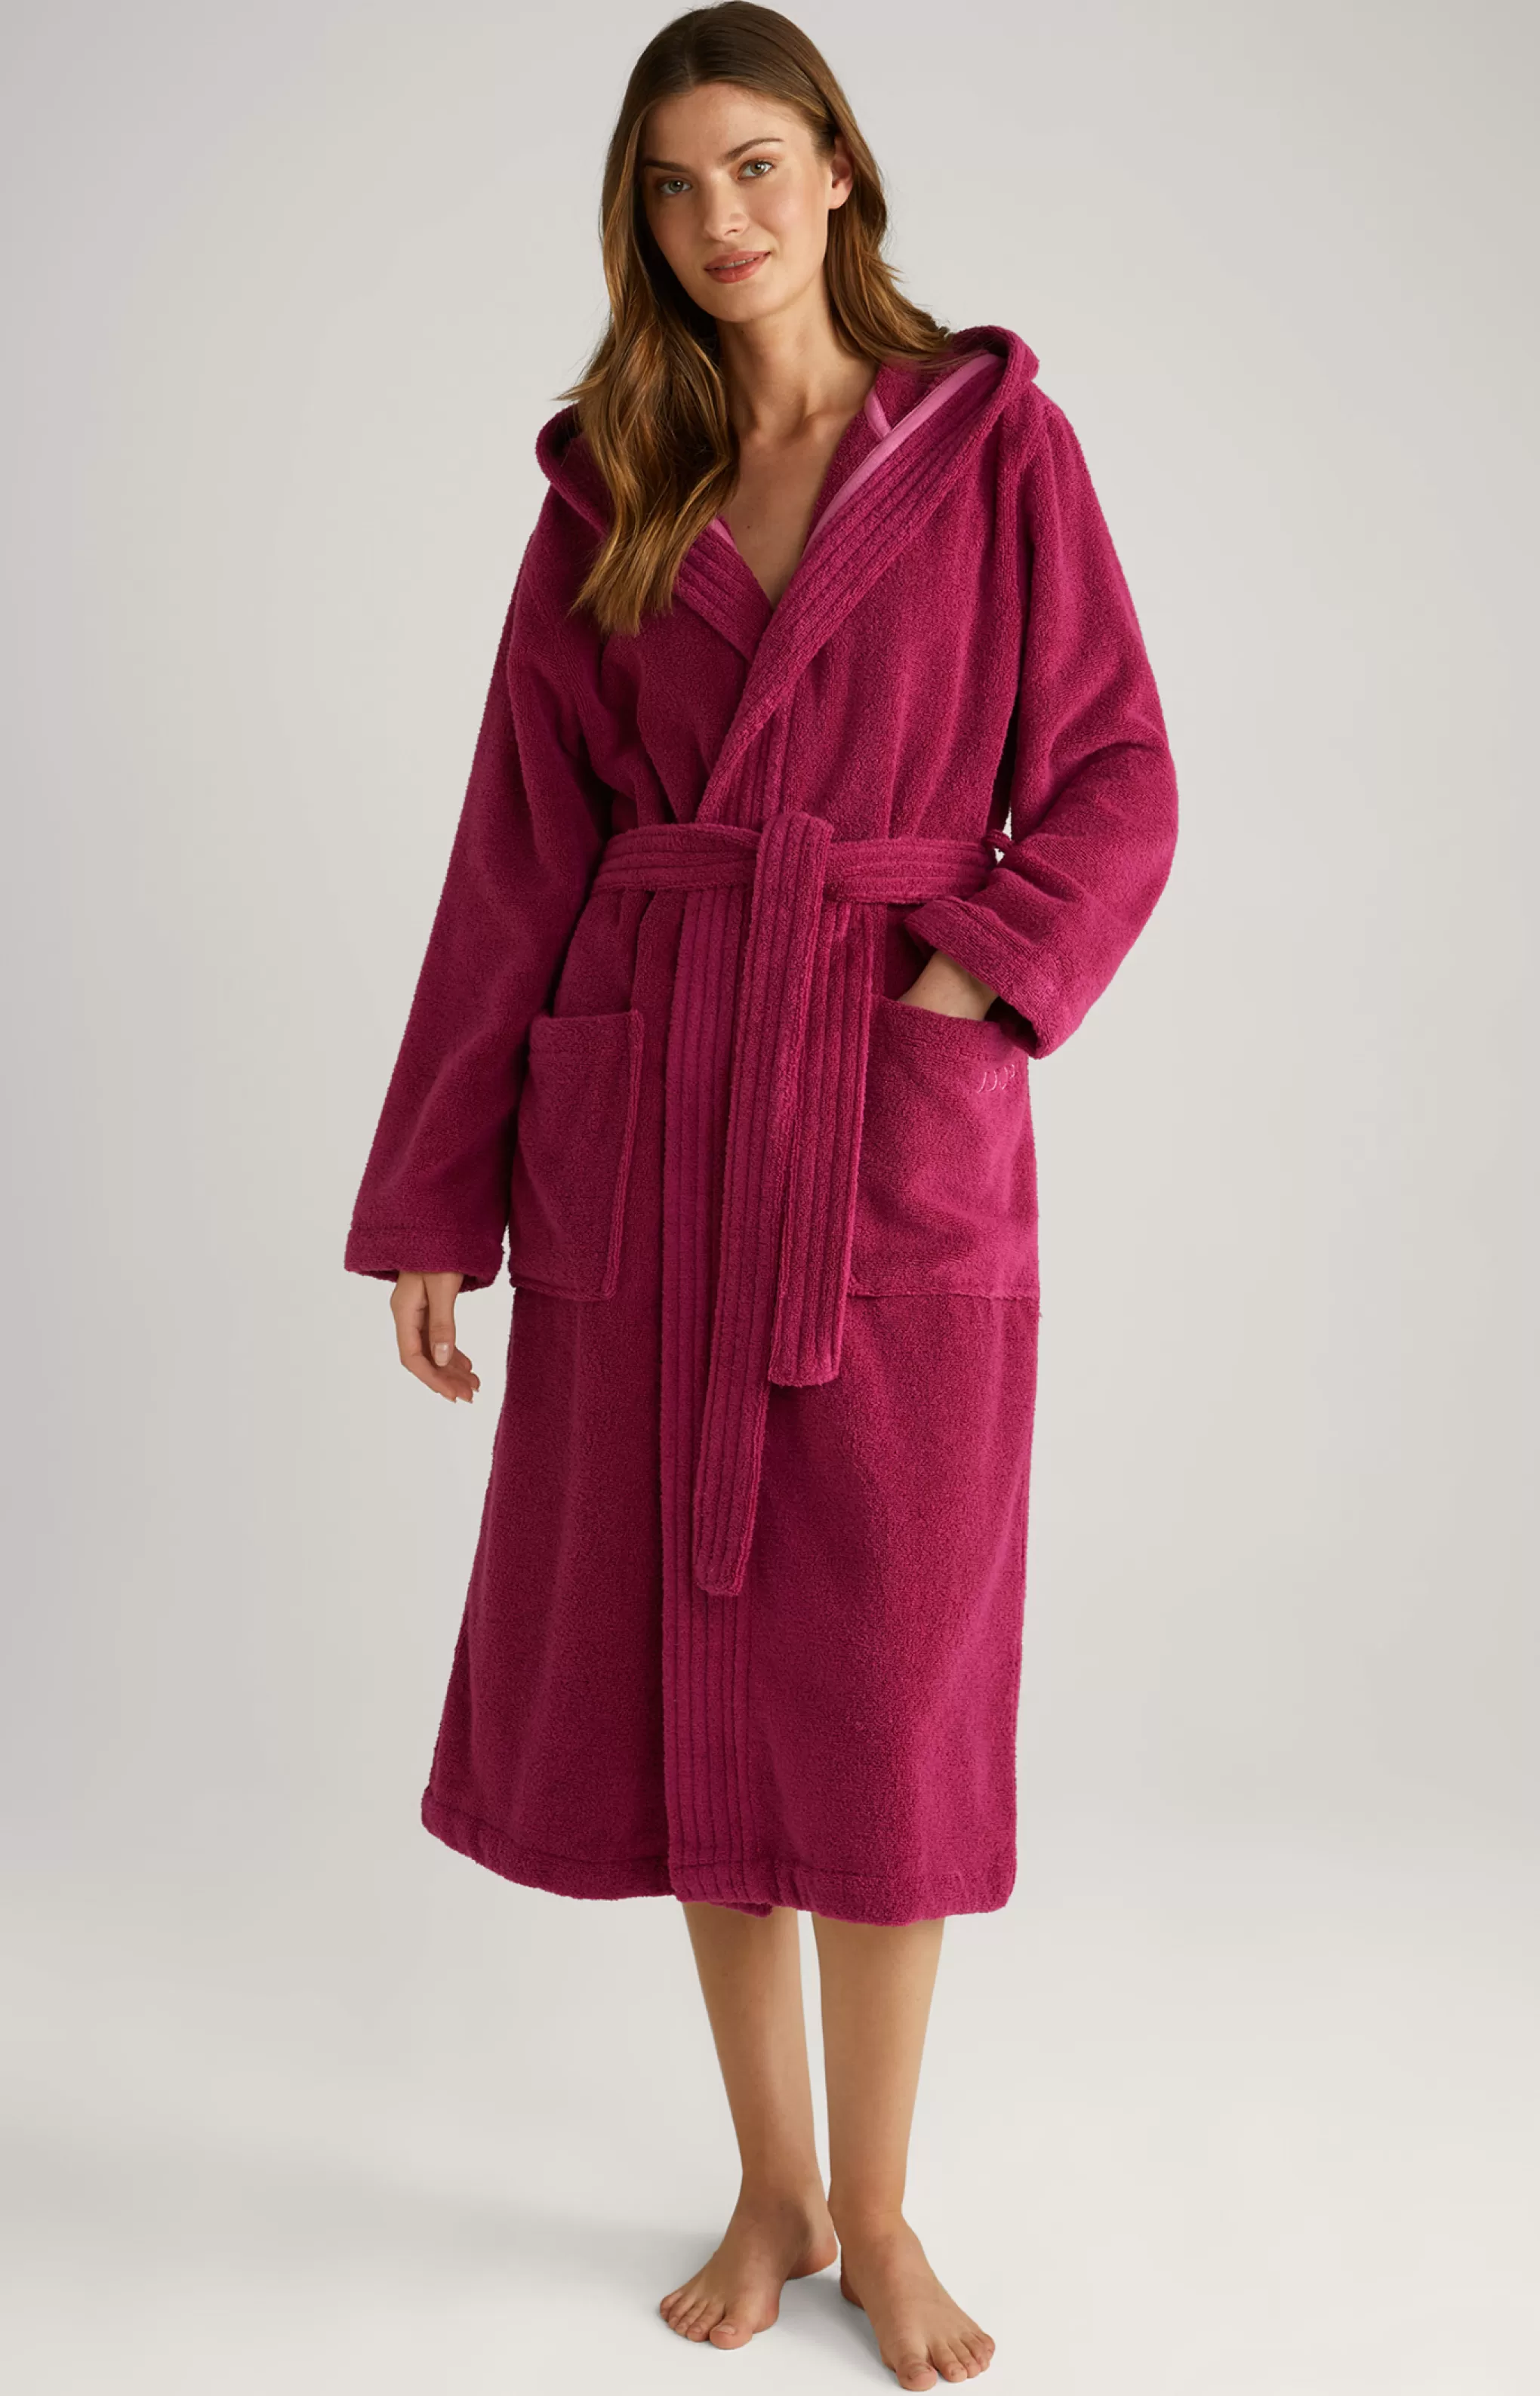 Bathrobes | Loungewear & Nightwear*JOOP Bathrobes | Loungewear & Nightwear Women’s bathrobe in violet